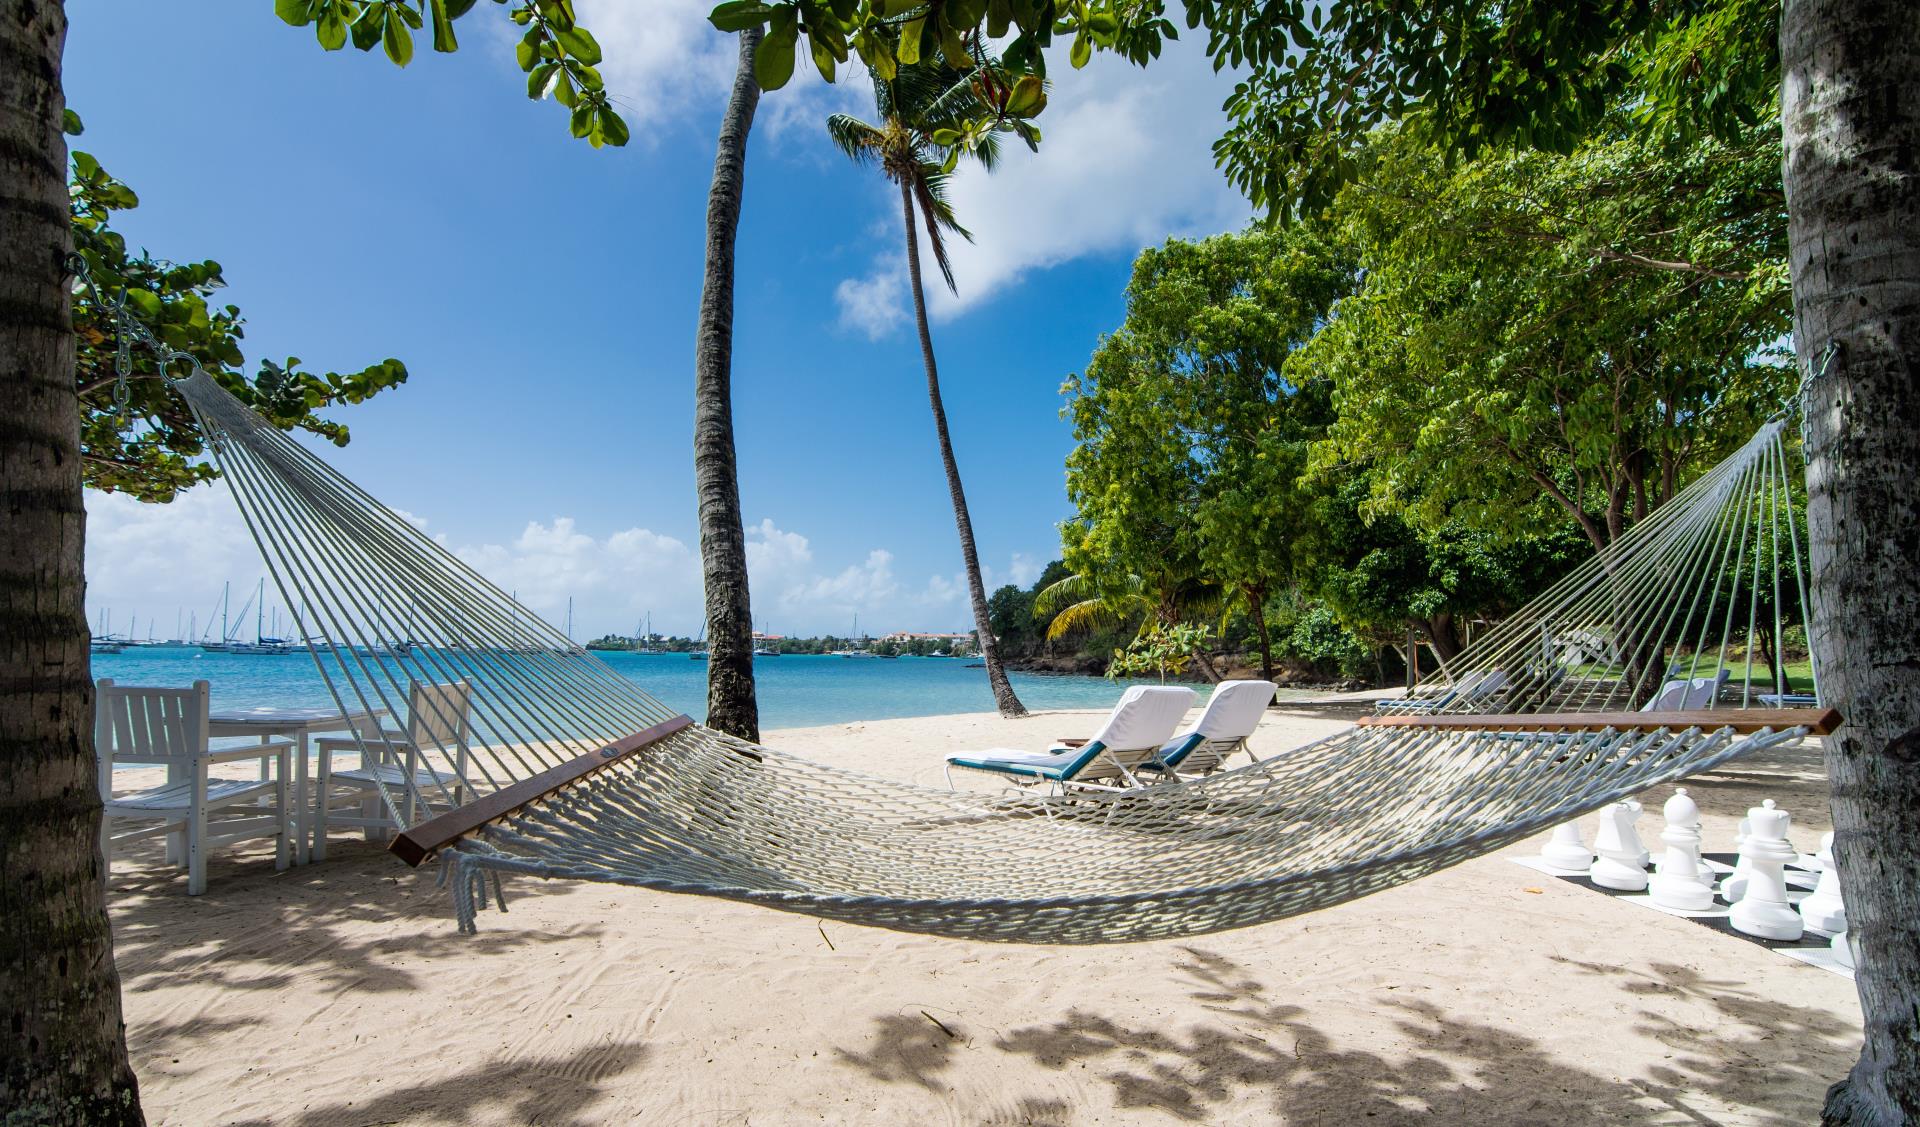 Beach hammock - Calabash, Grenada